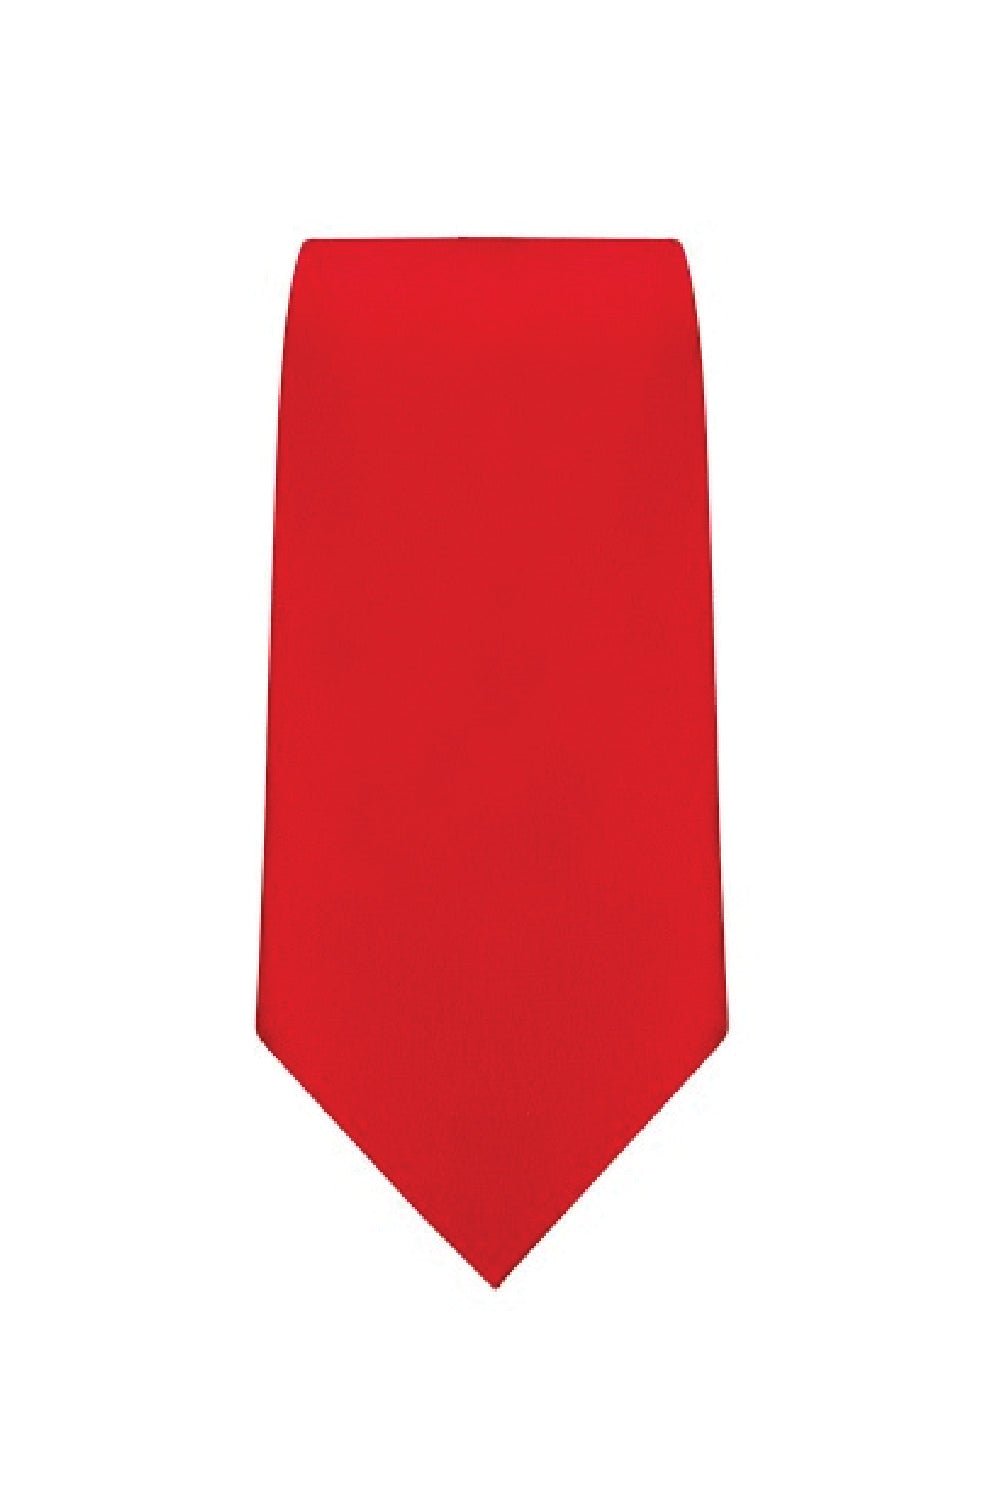 S.J 39" Junior Tie - Uniformwise Schoolwear